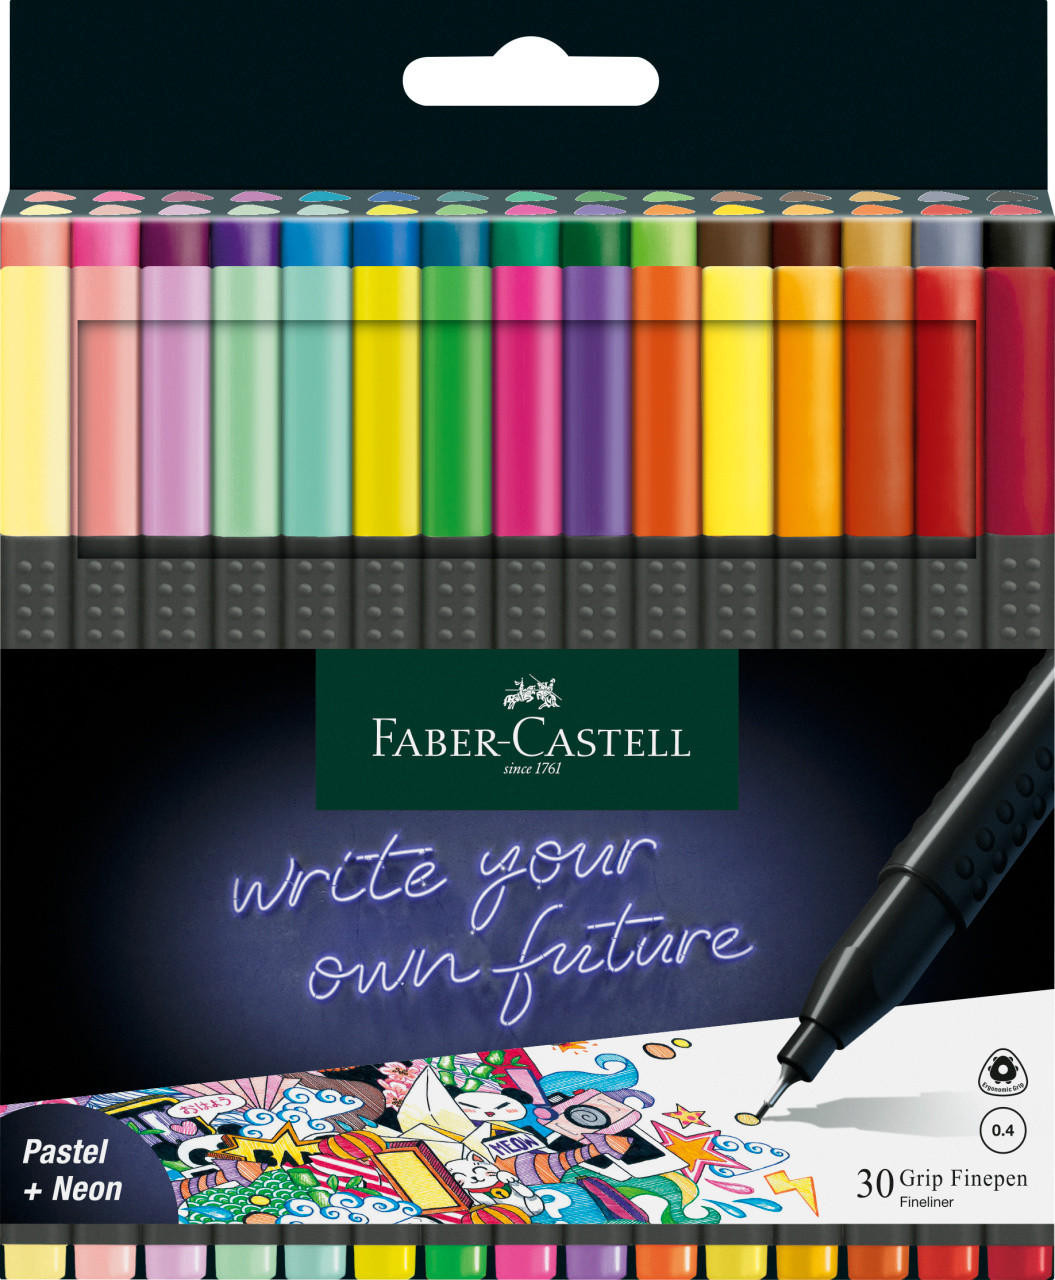 Faber-Castell Faber Castell Grip Finepen Set of 30